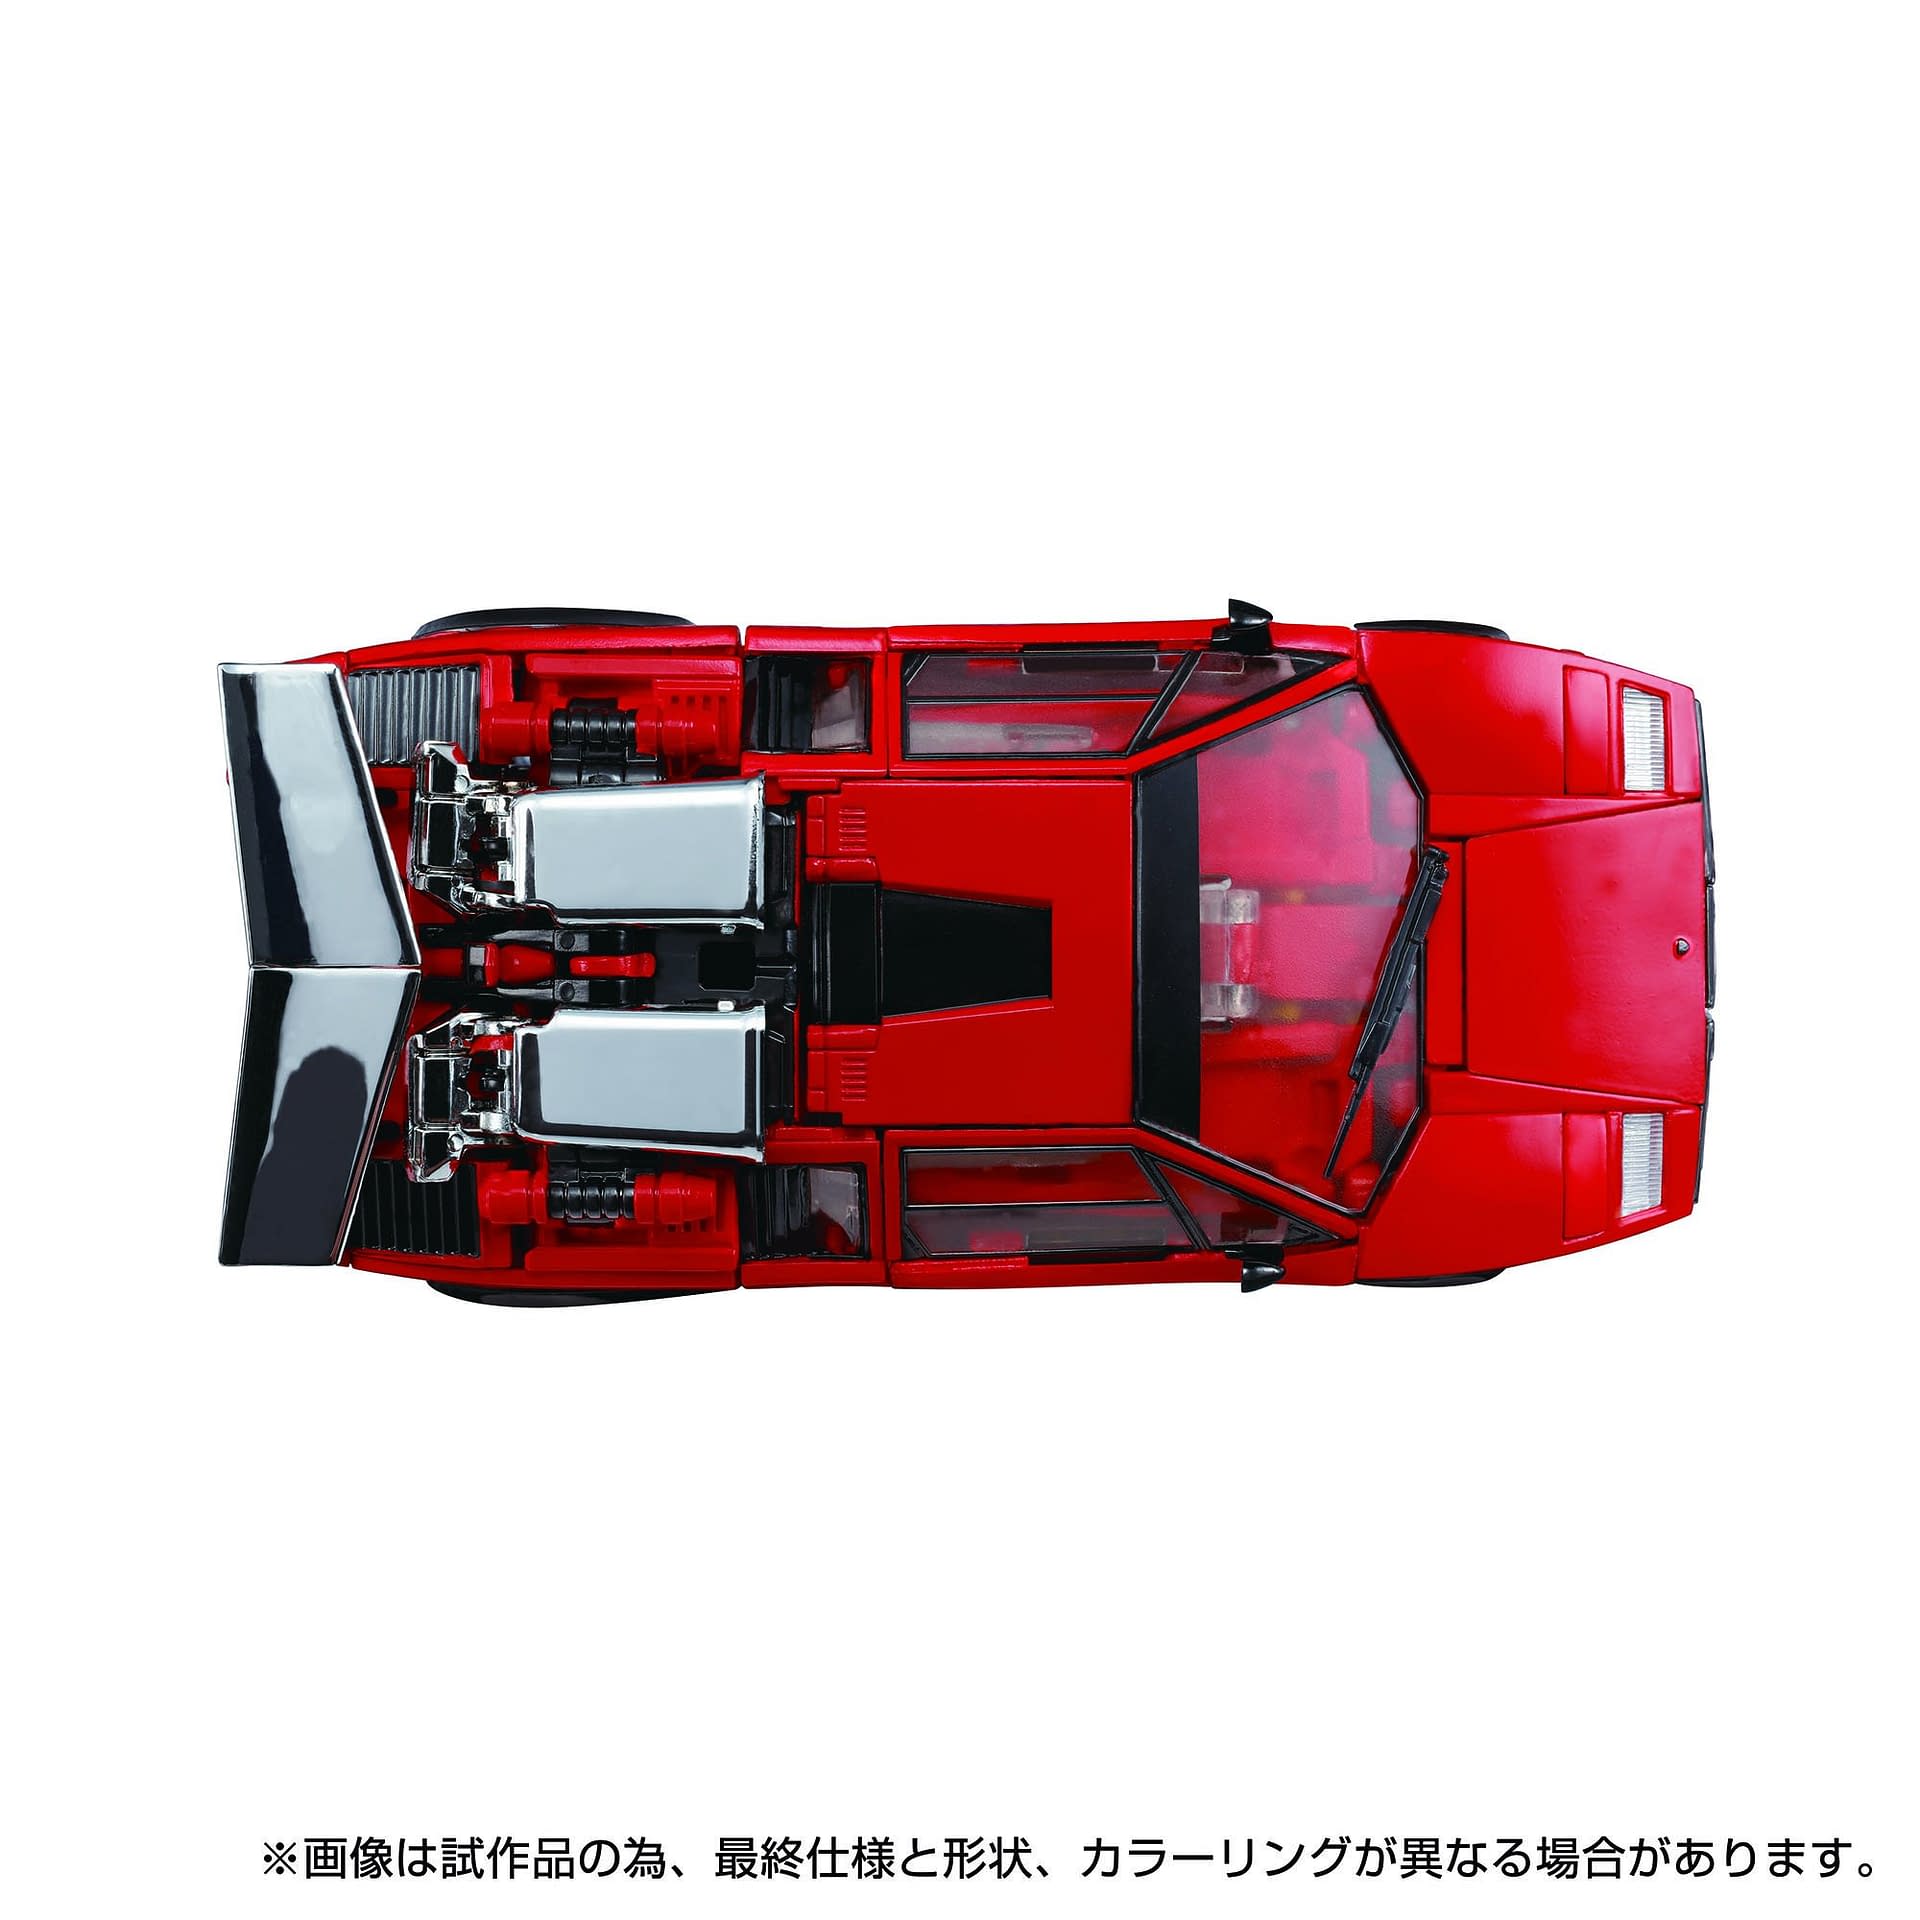 Transformers Takara Tomy Masterpiece MP-39 + Spinout Pré-commande $ 114.99